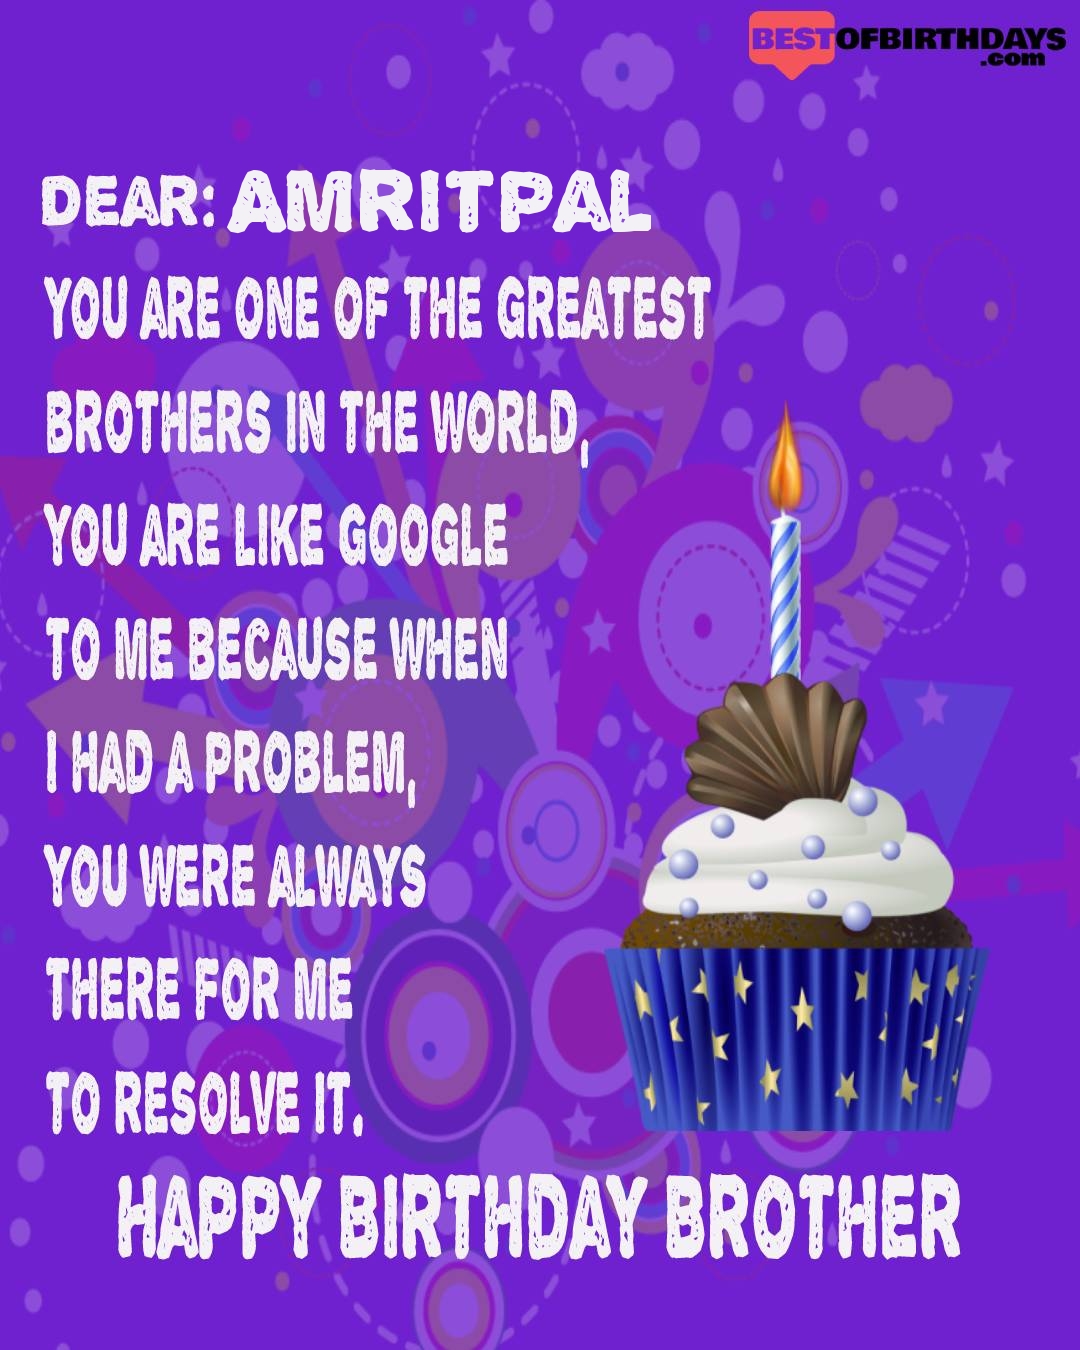 Happy birthday amritpal bhai brother bro